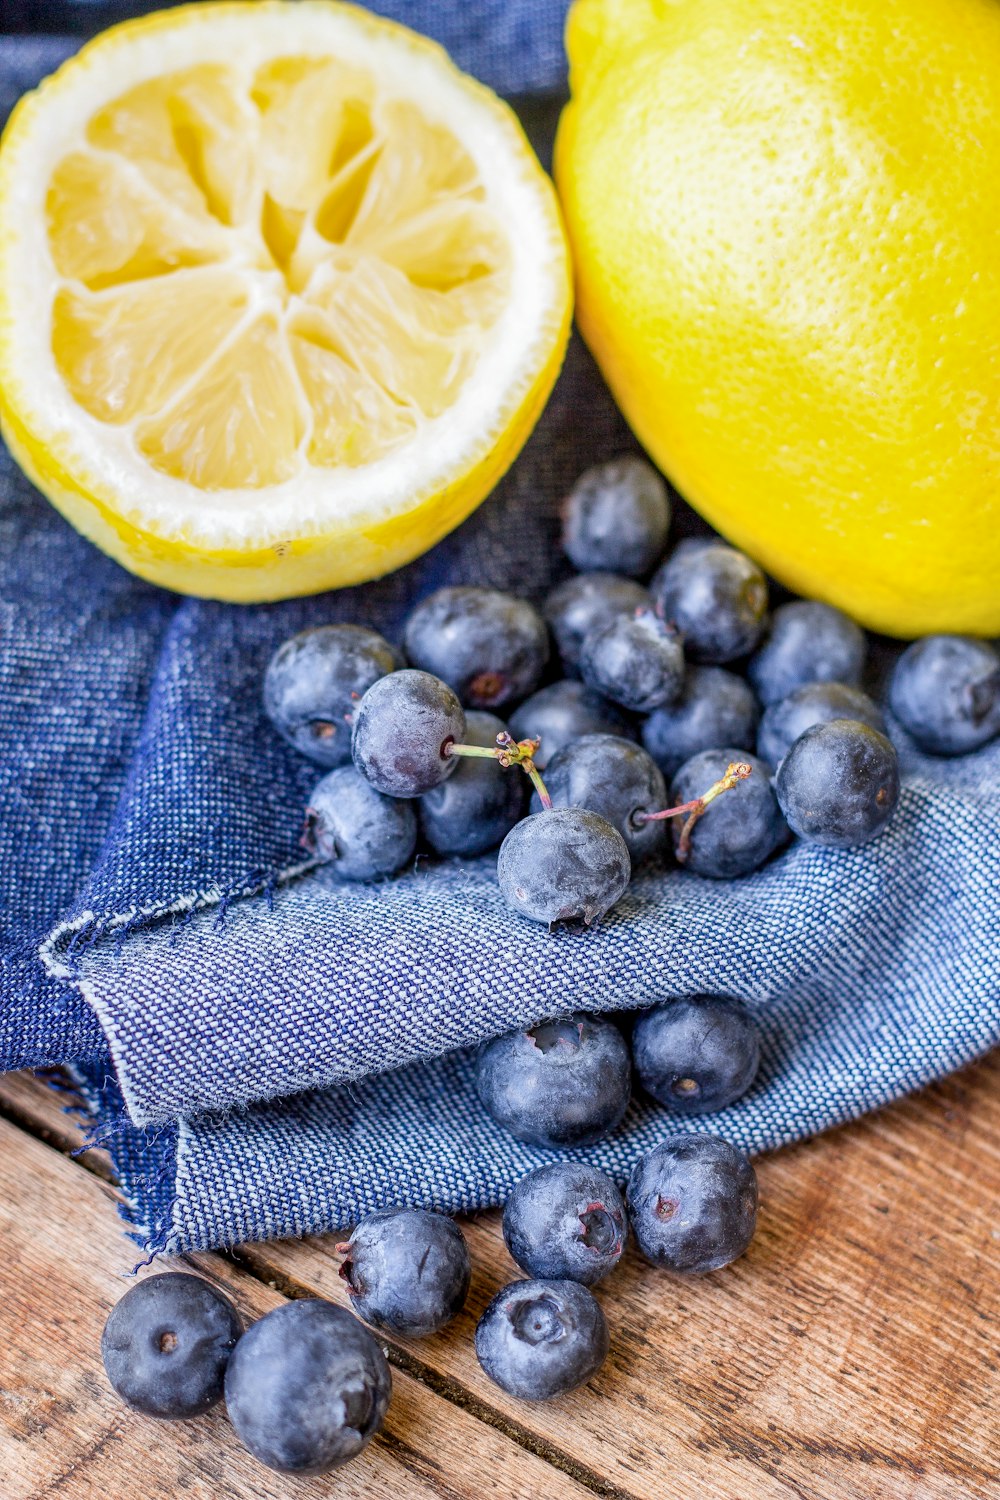 blueberry fruits near yellow lemon closeup photography